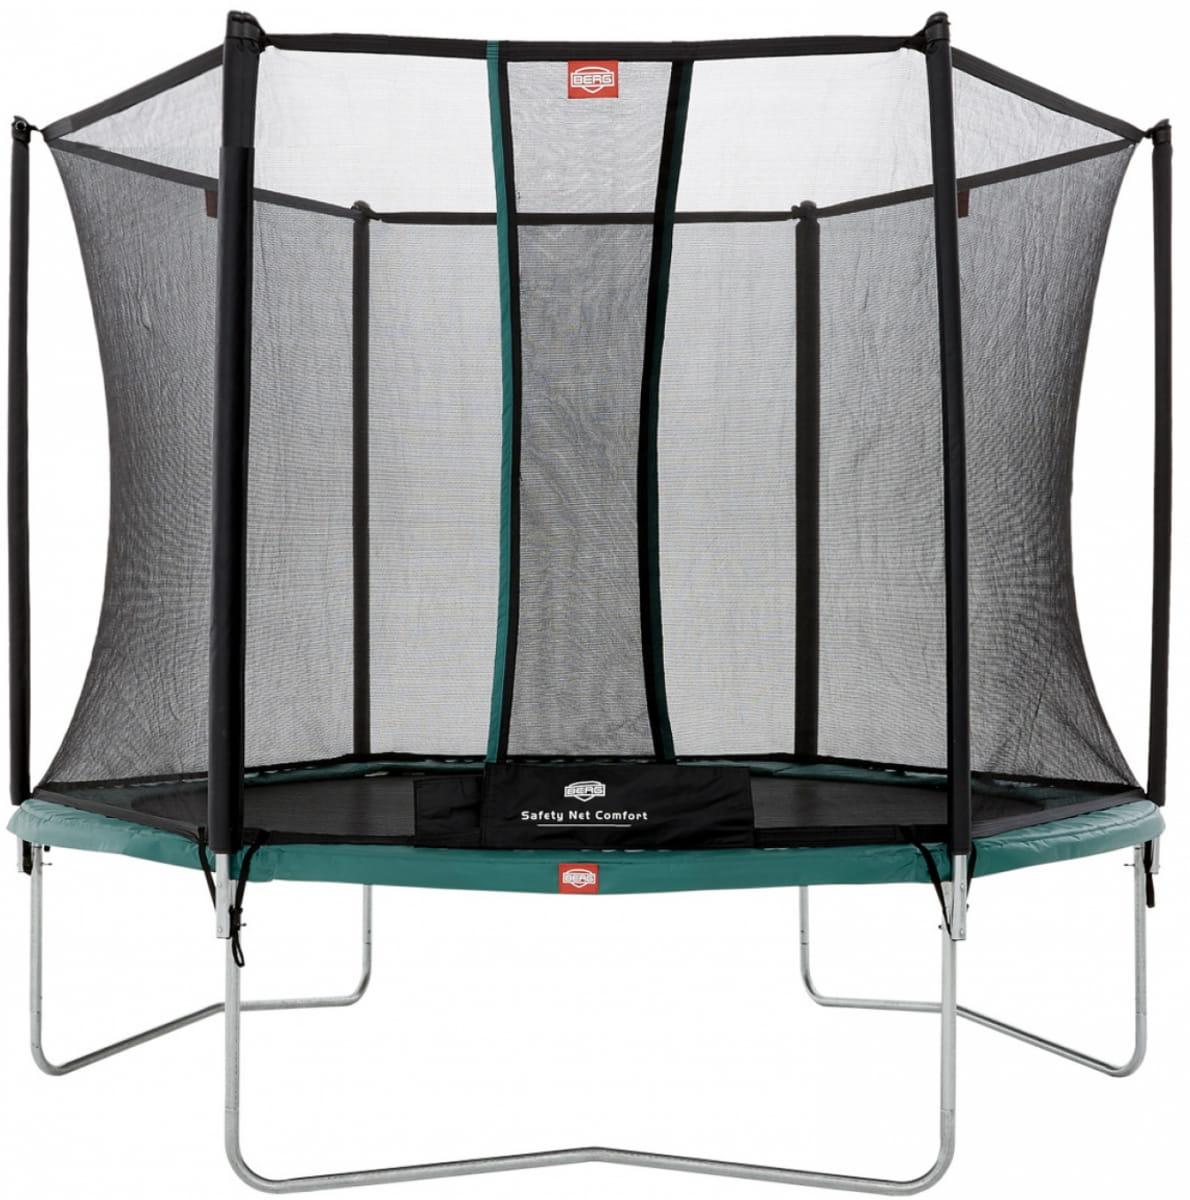   Berg Favorit    Safety Net Comfort - 330 (Green)